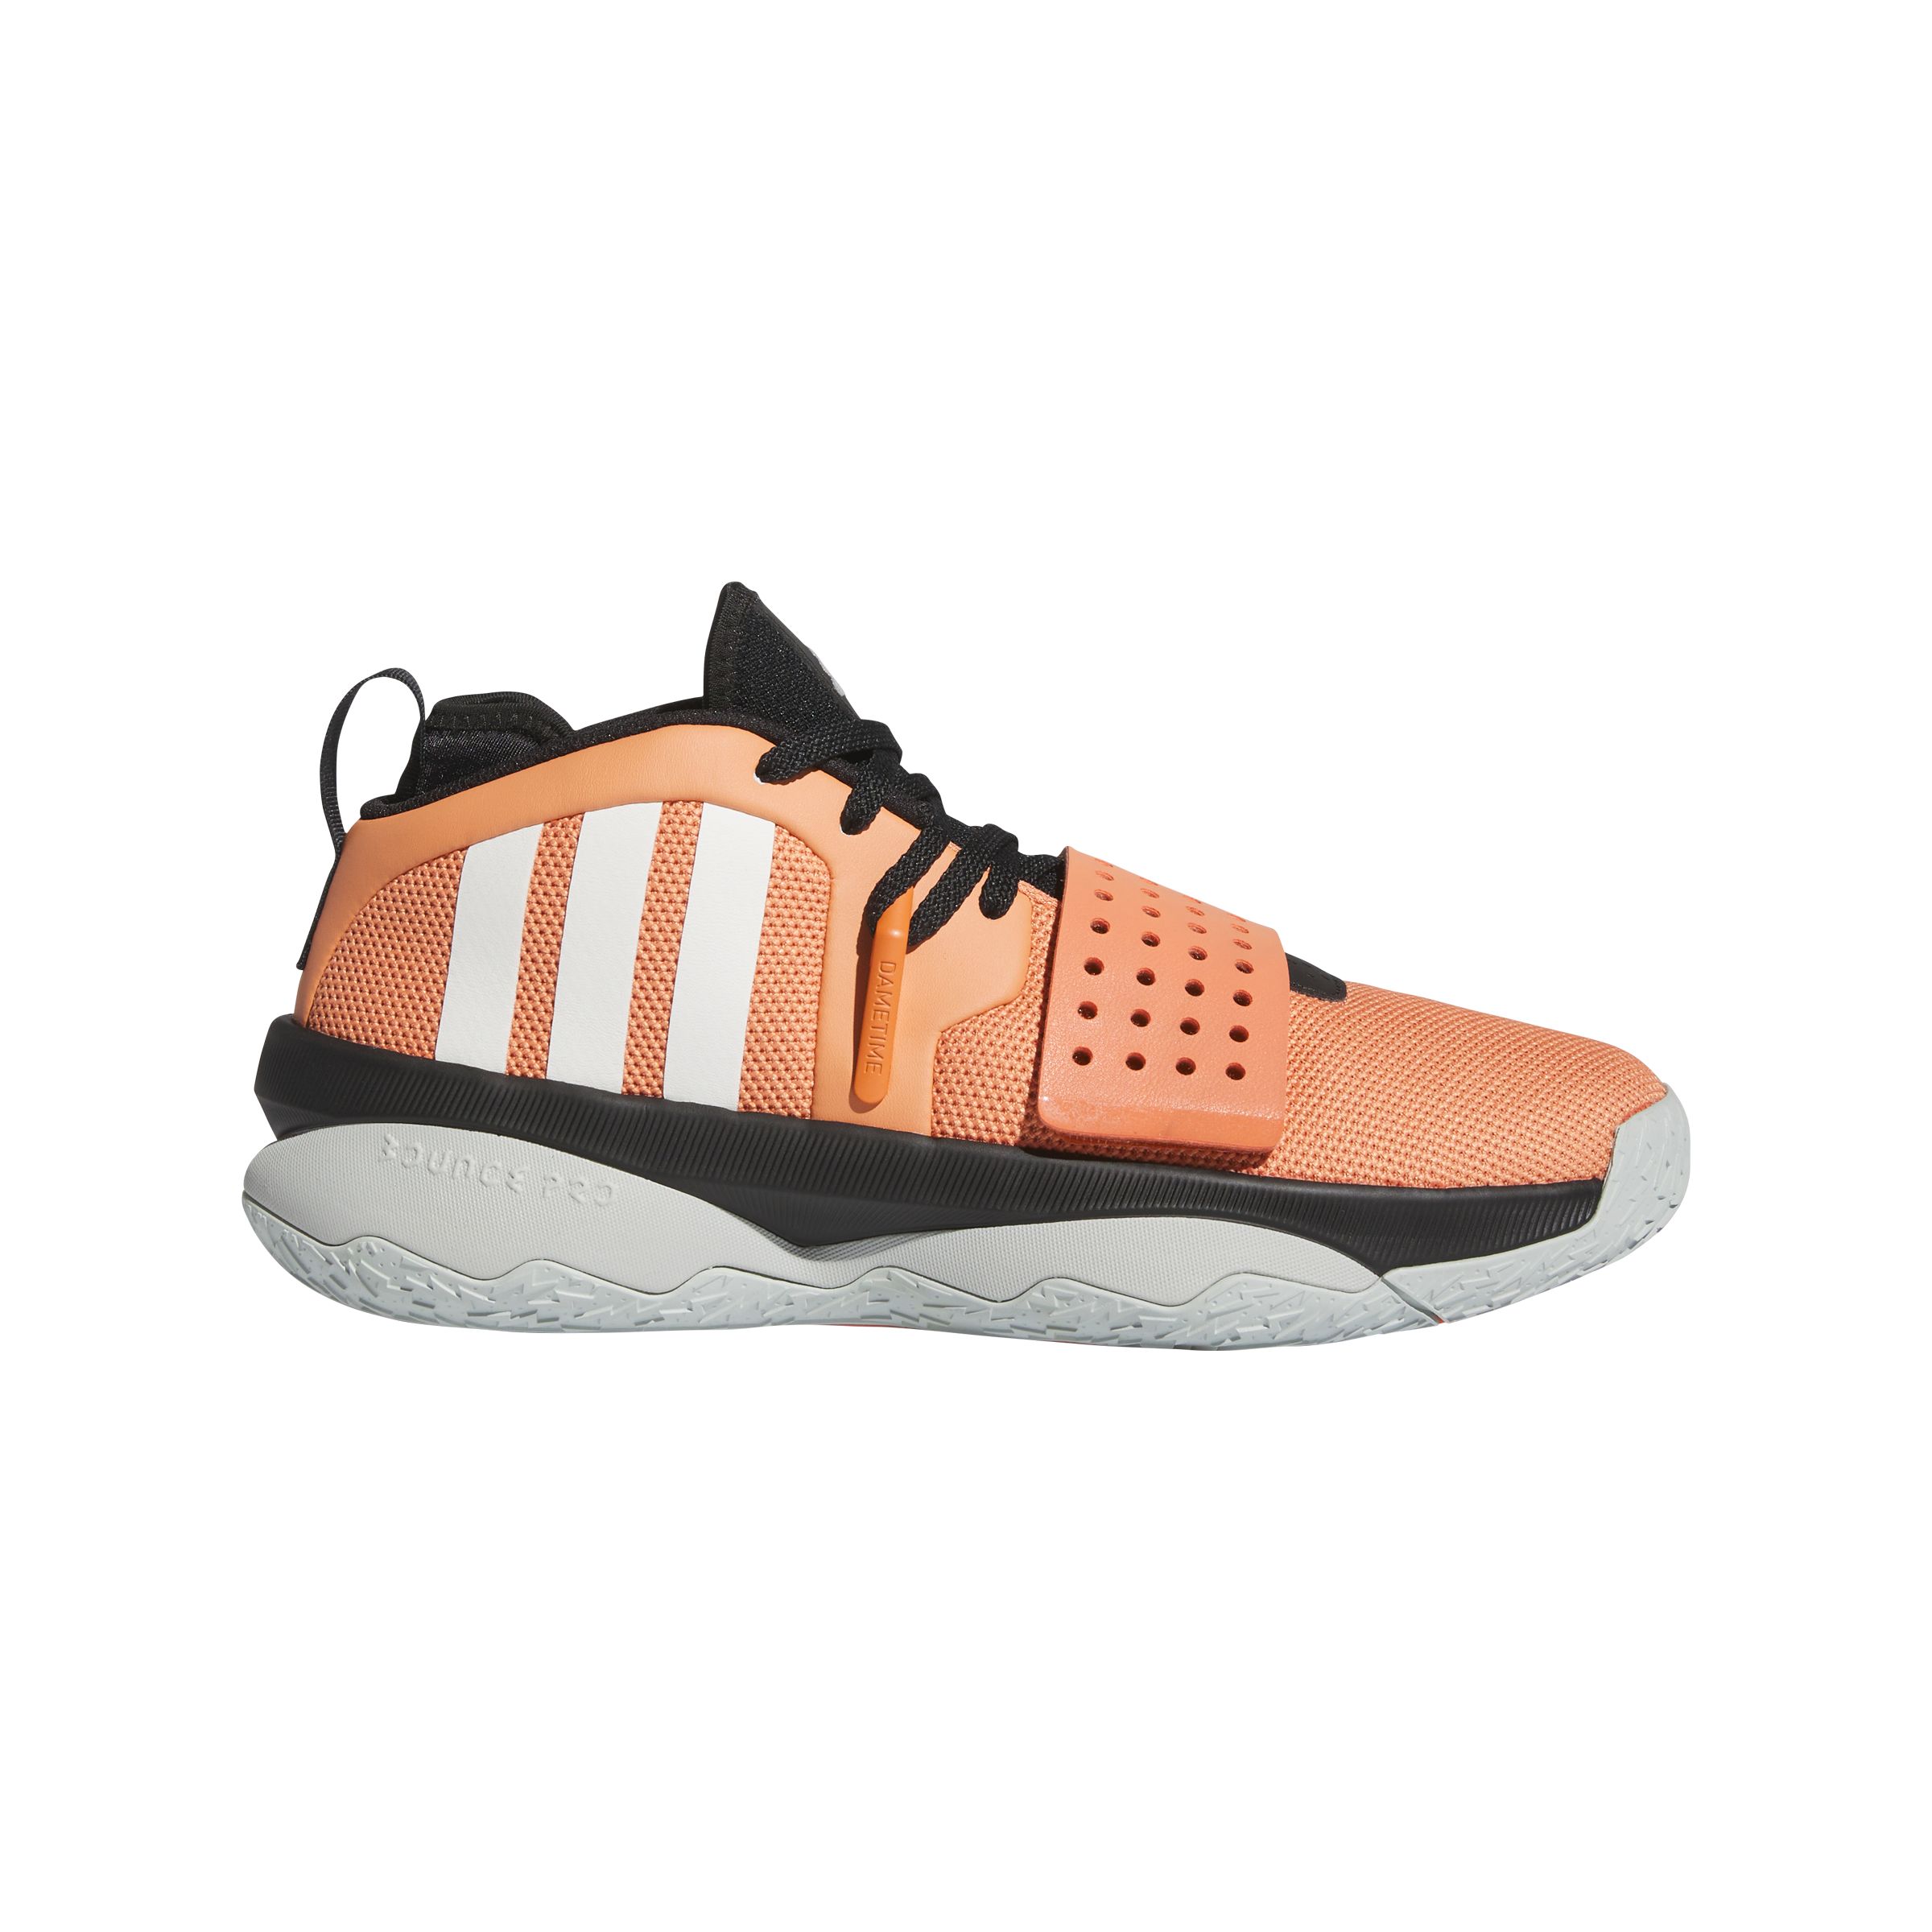 adidas Dame 8 Basketball Shoes | SportChek